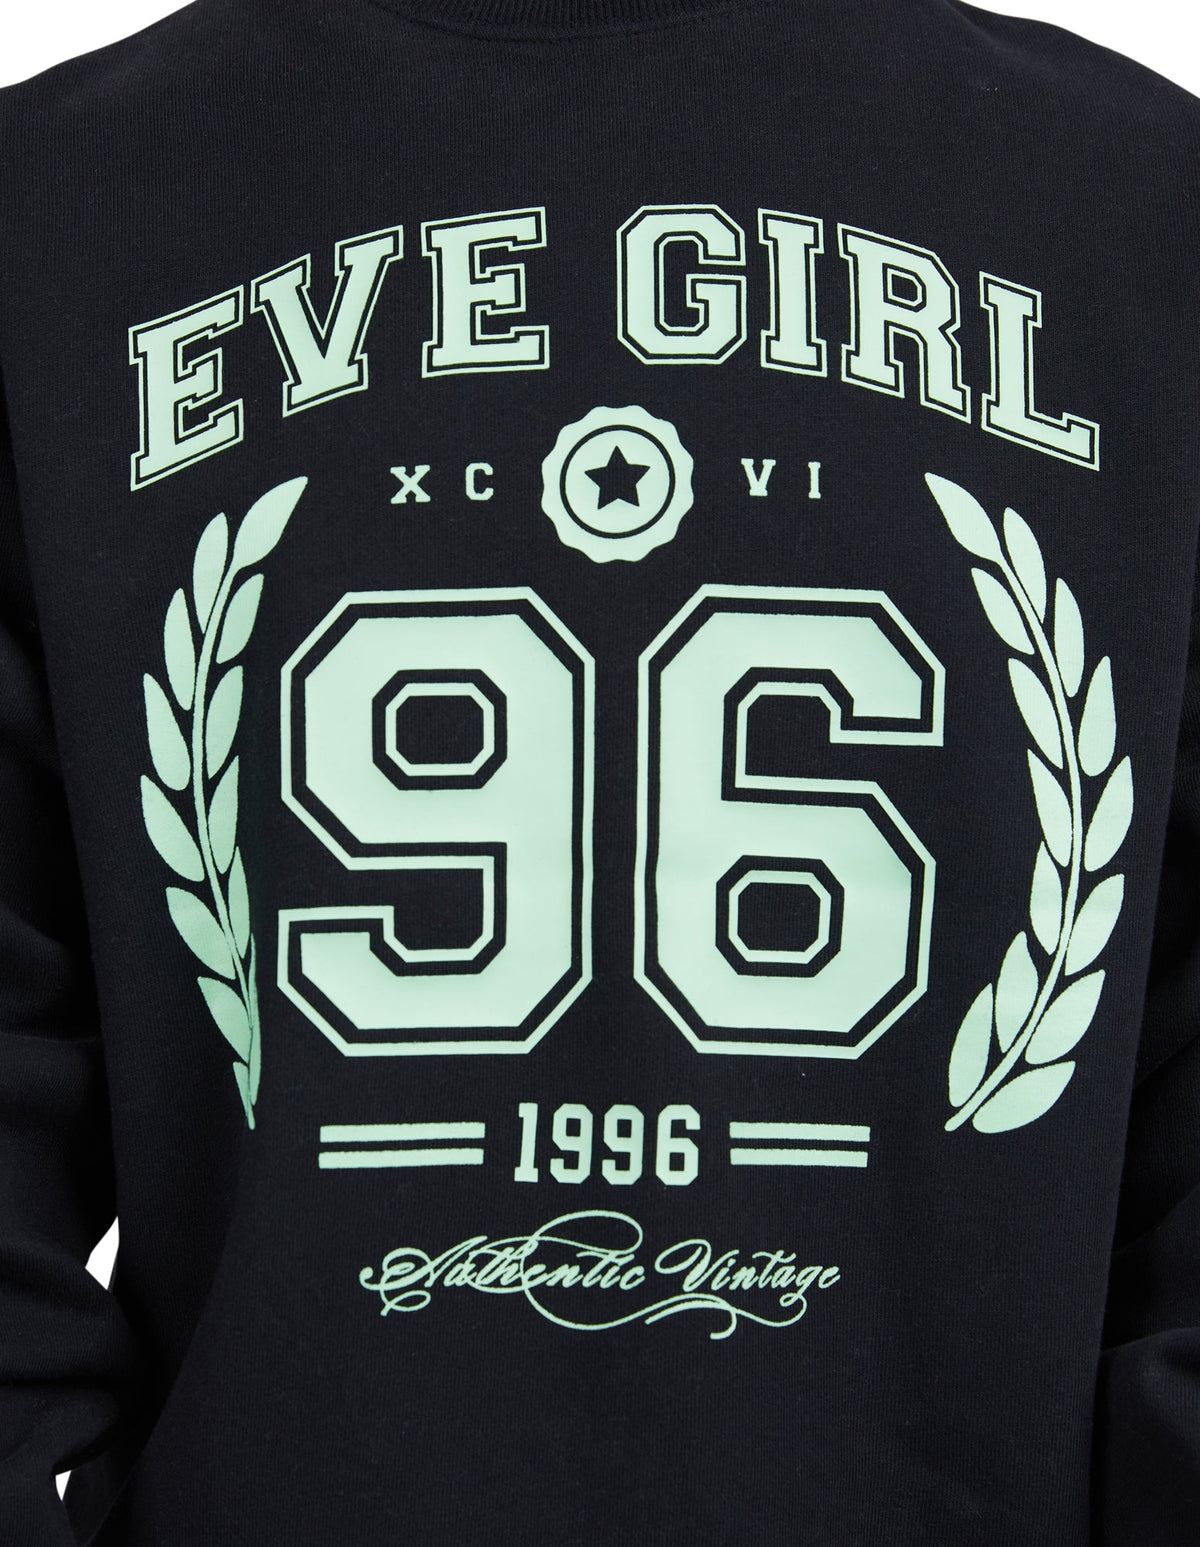 Eve Girl 8-16-Teen Academy Crew Black-Edge Clothing